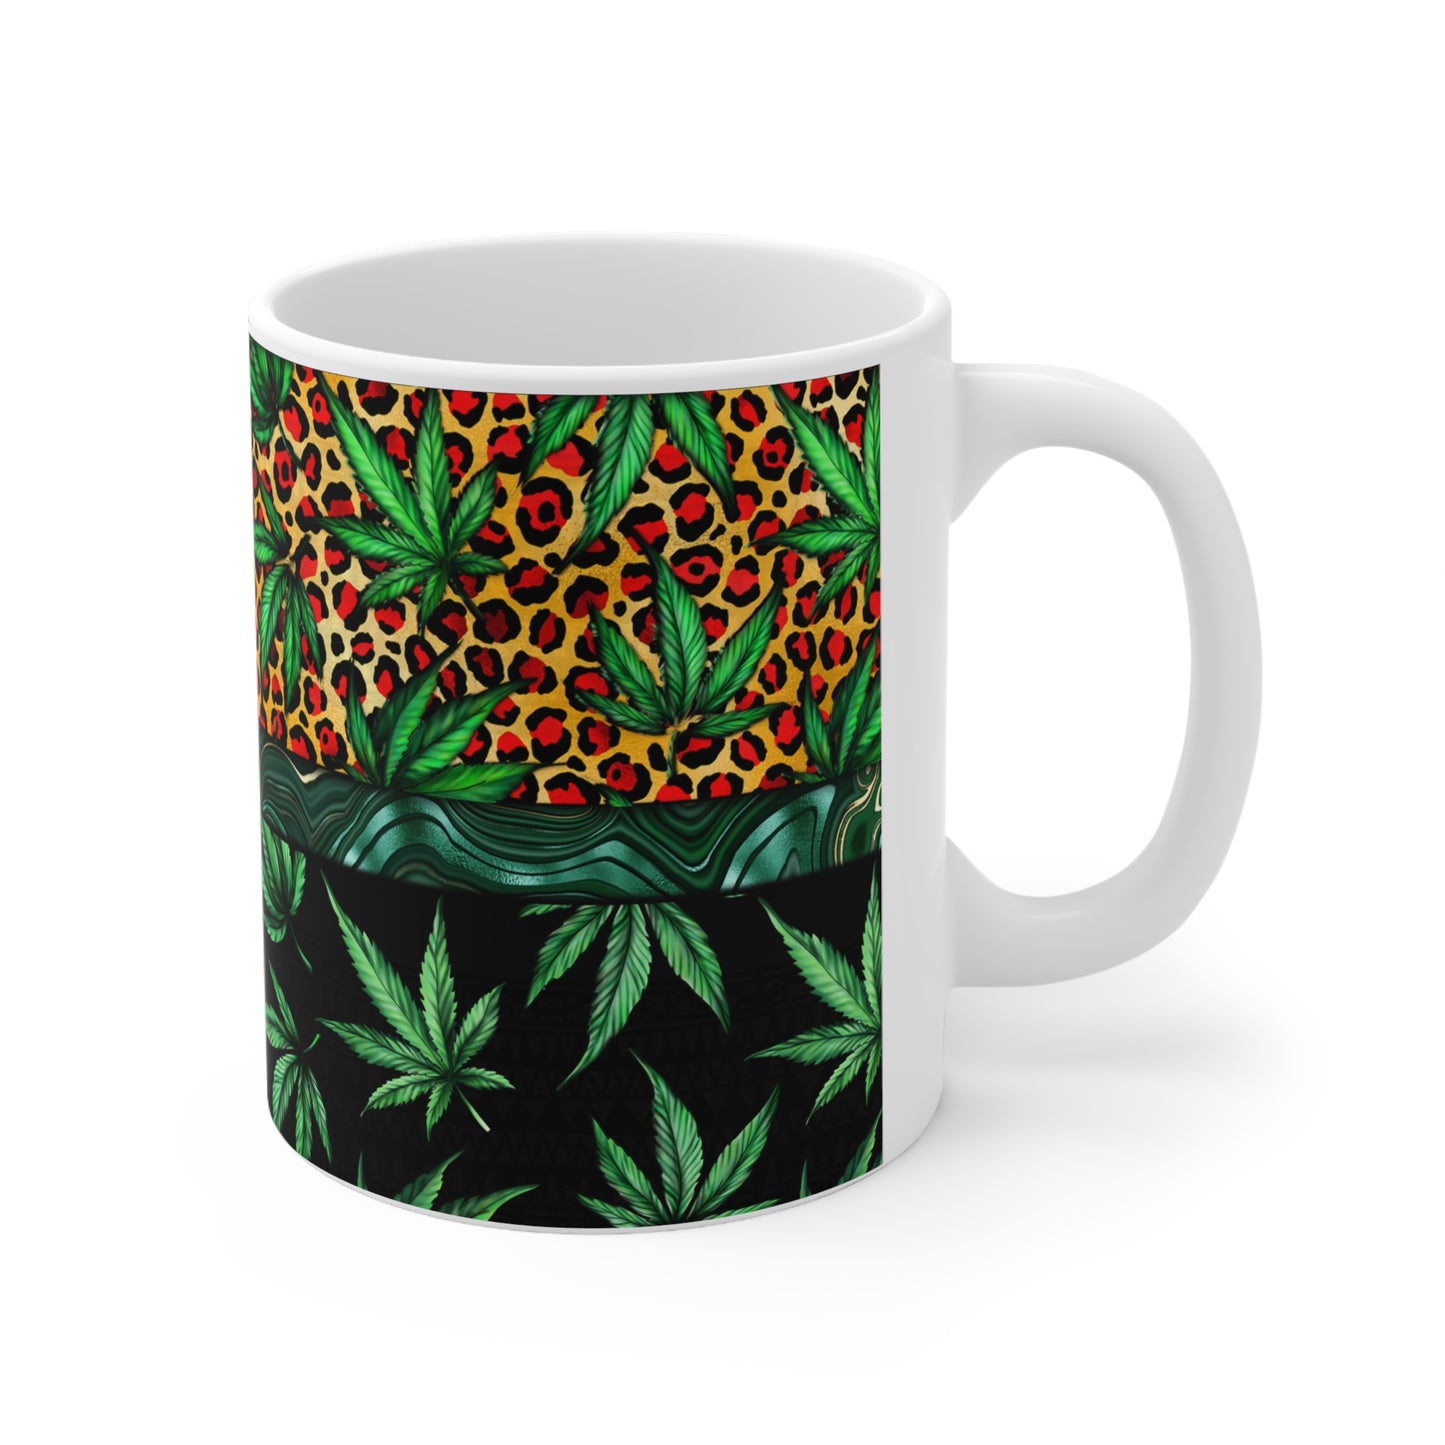 Cannabis Leaves & Leapord Print Ceramic Mug 11oz